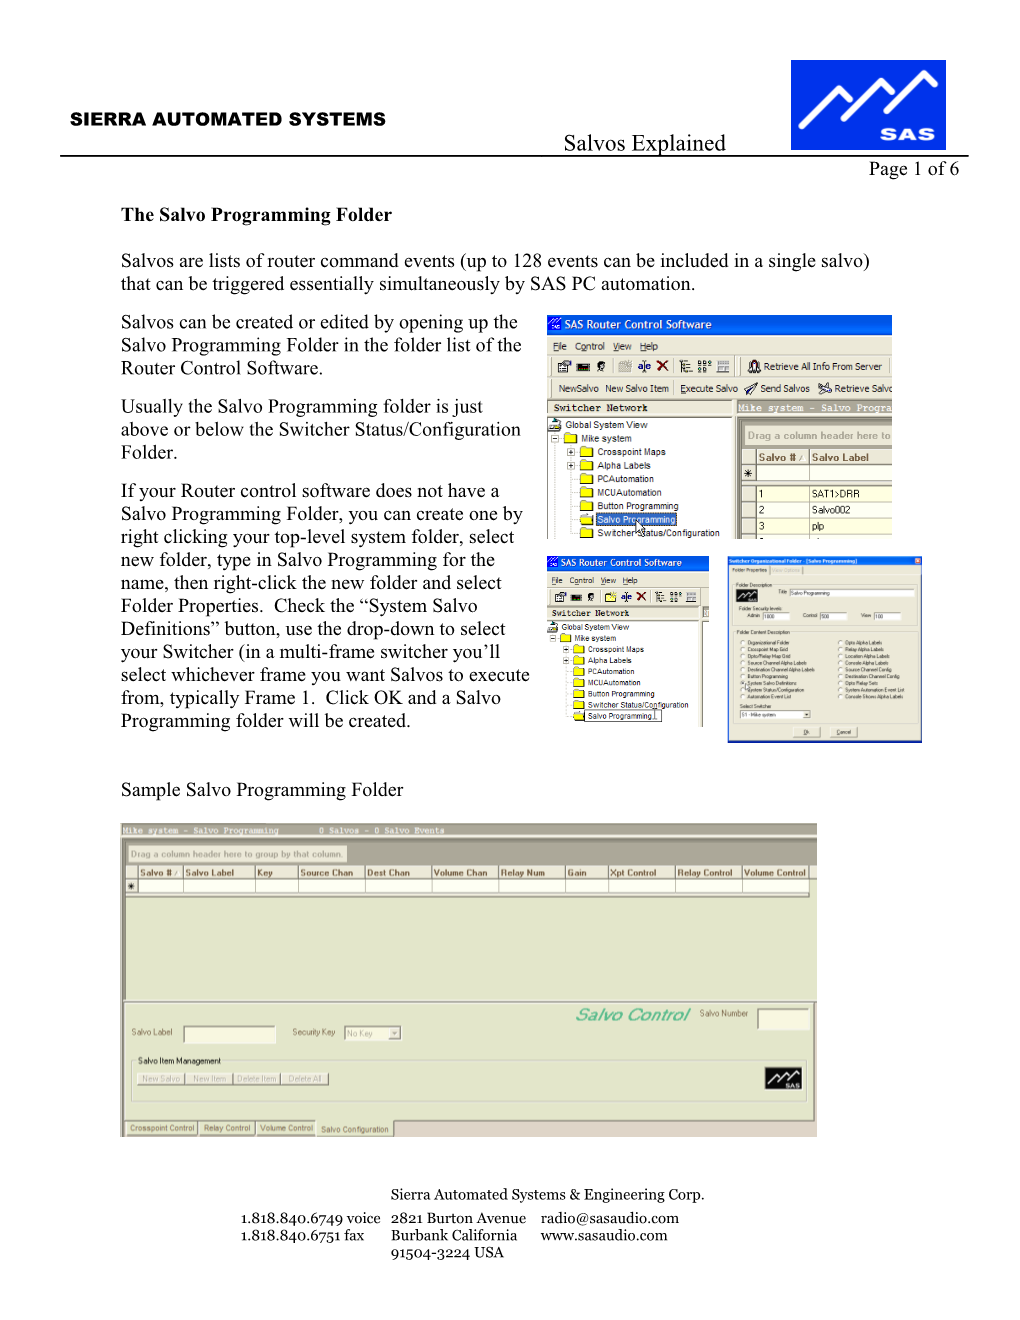 The Salvo Programming Folder